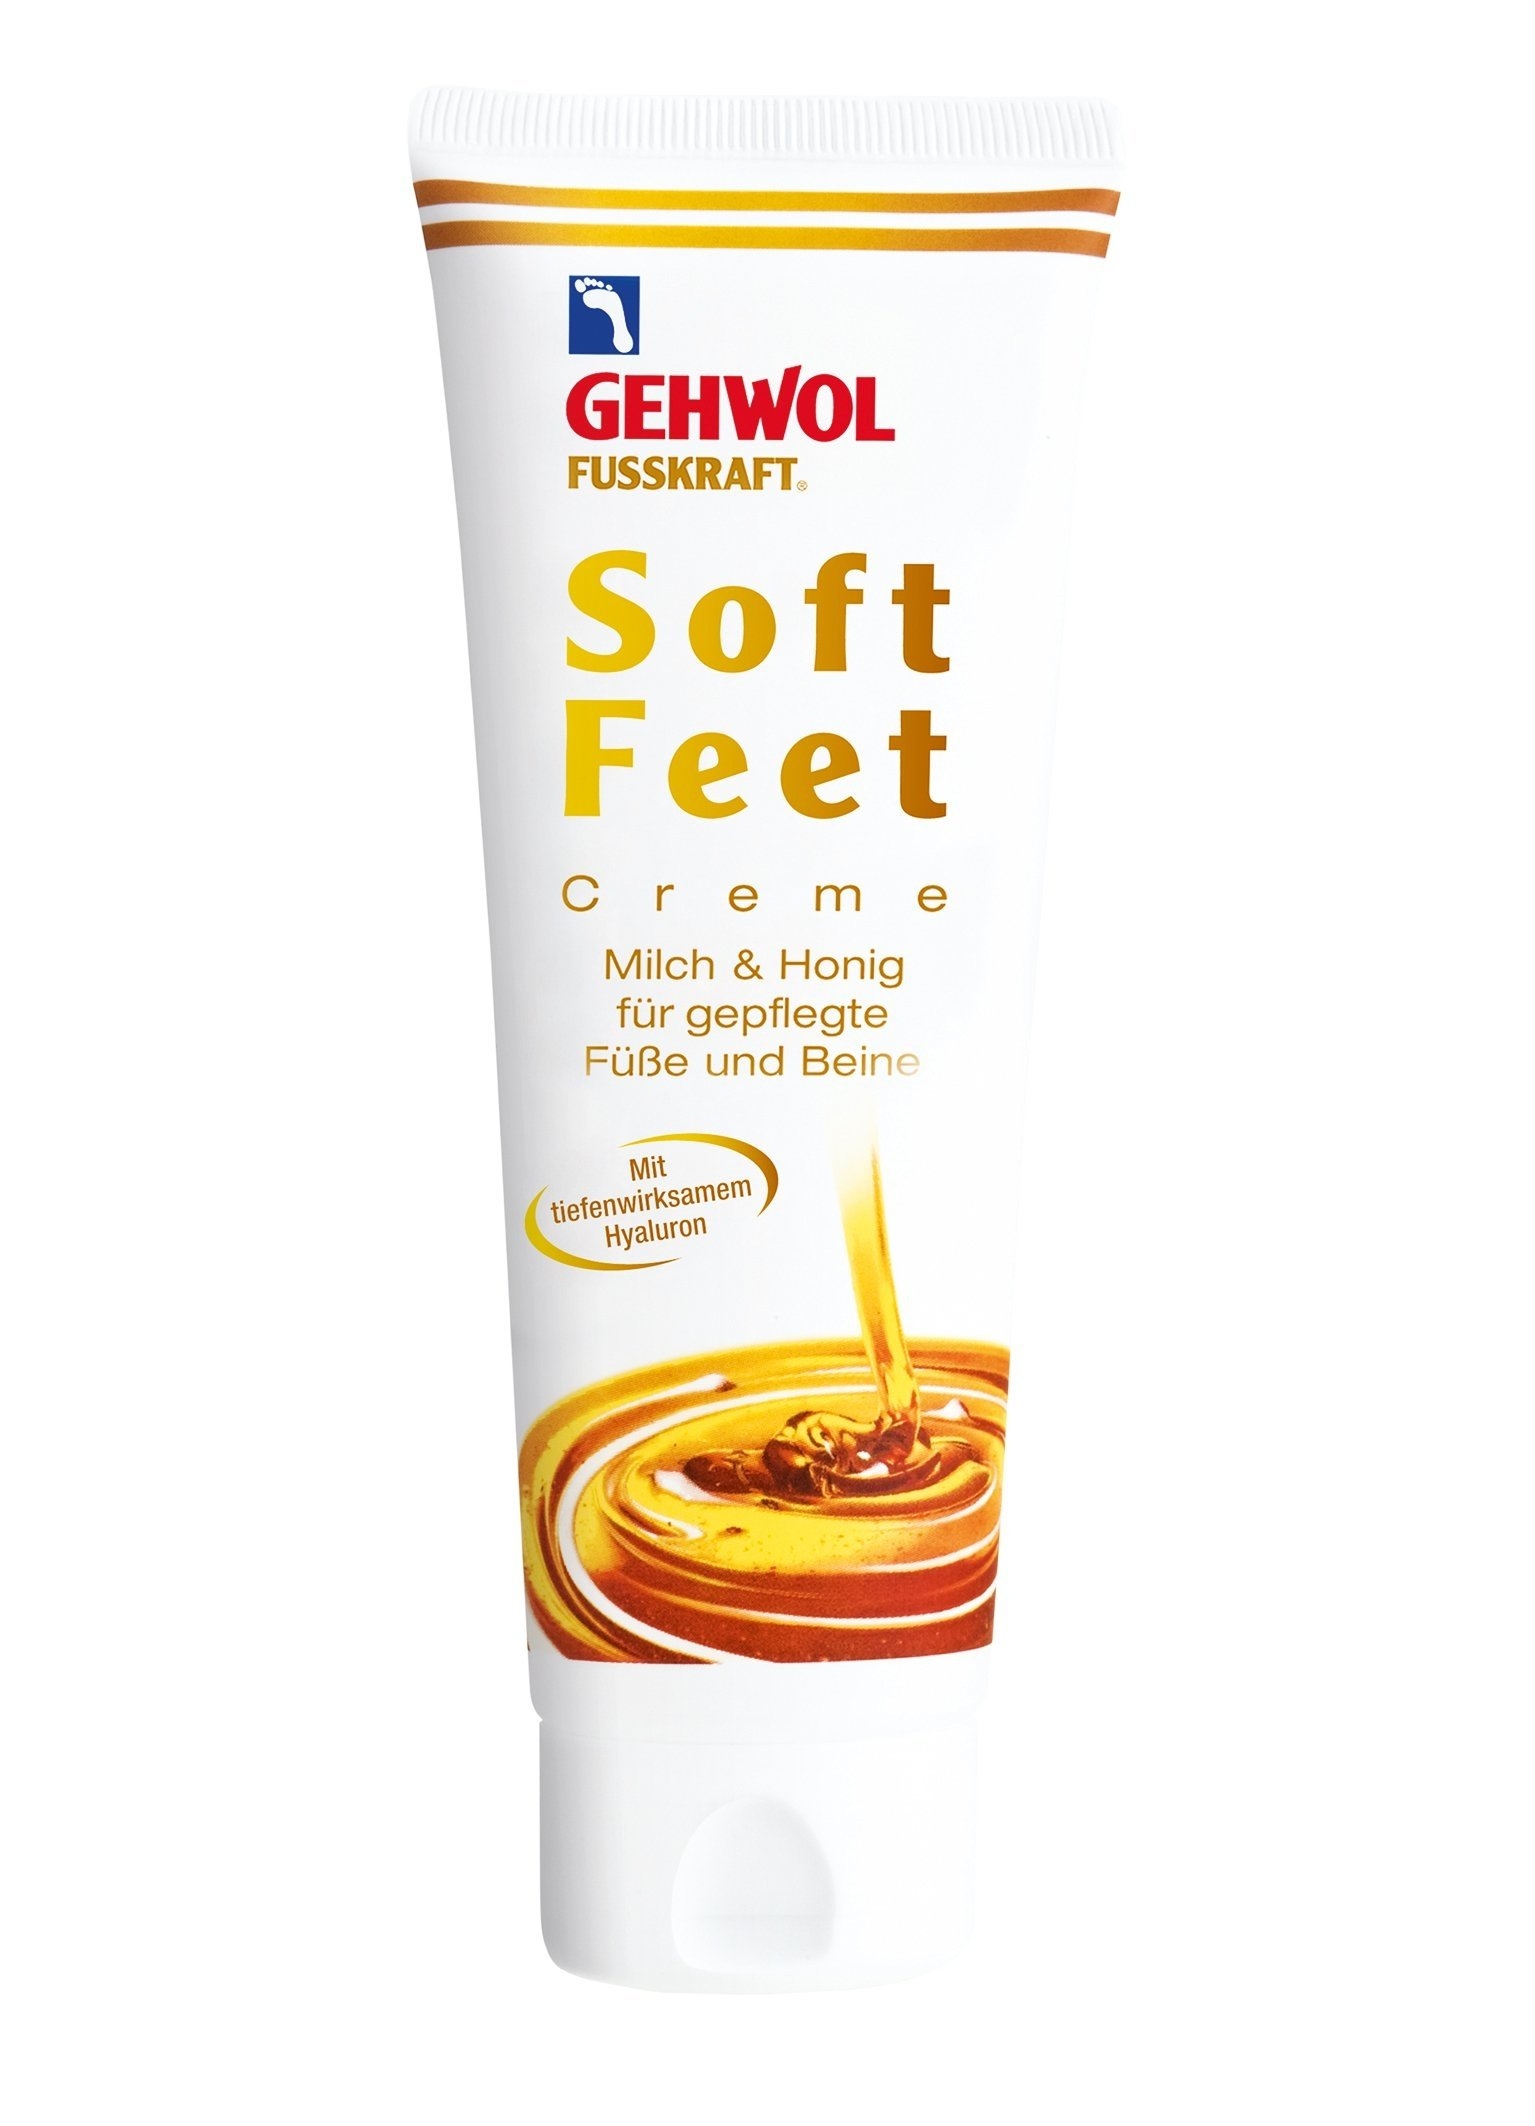 Fusskraft Soft Feet Creme 125ml